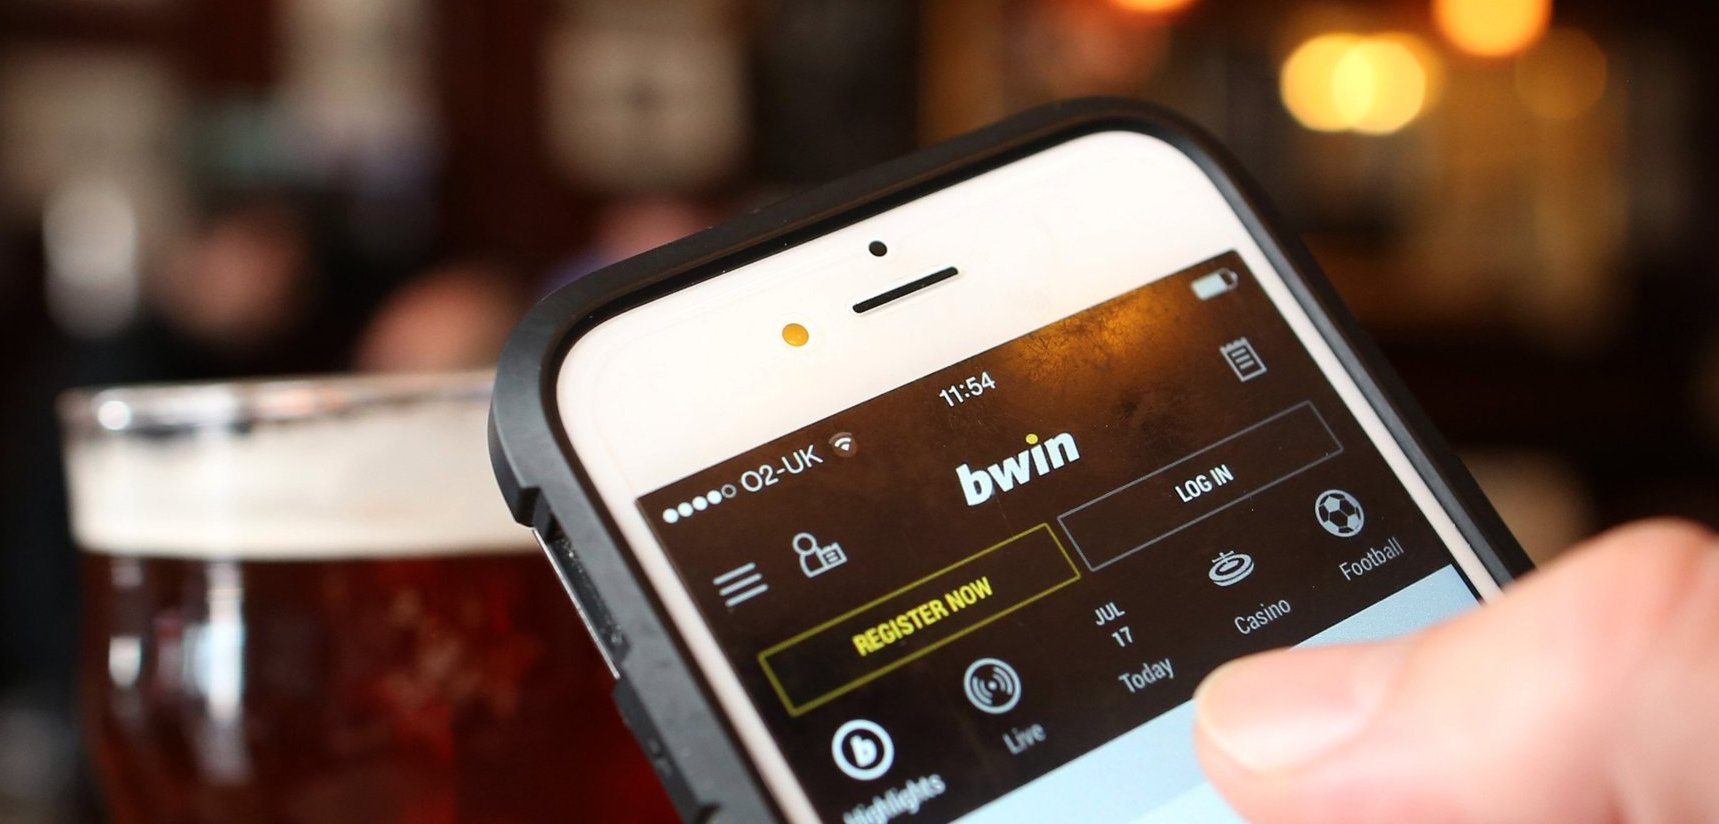 Bwin iPhone app